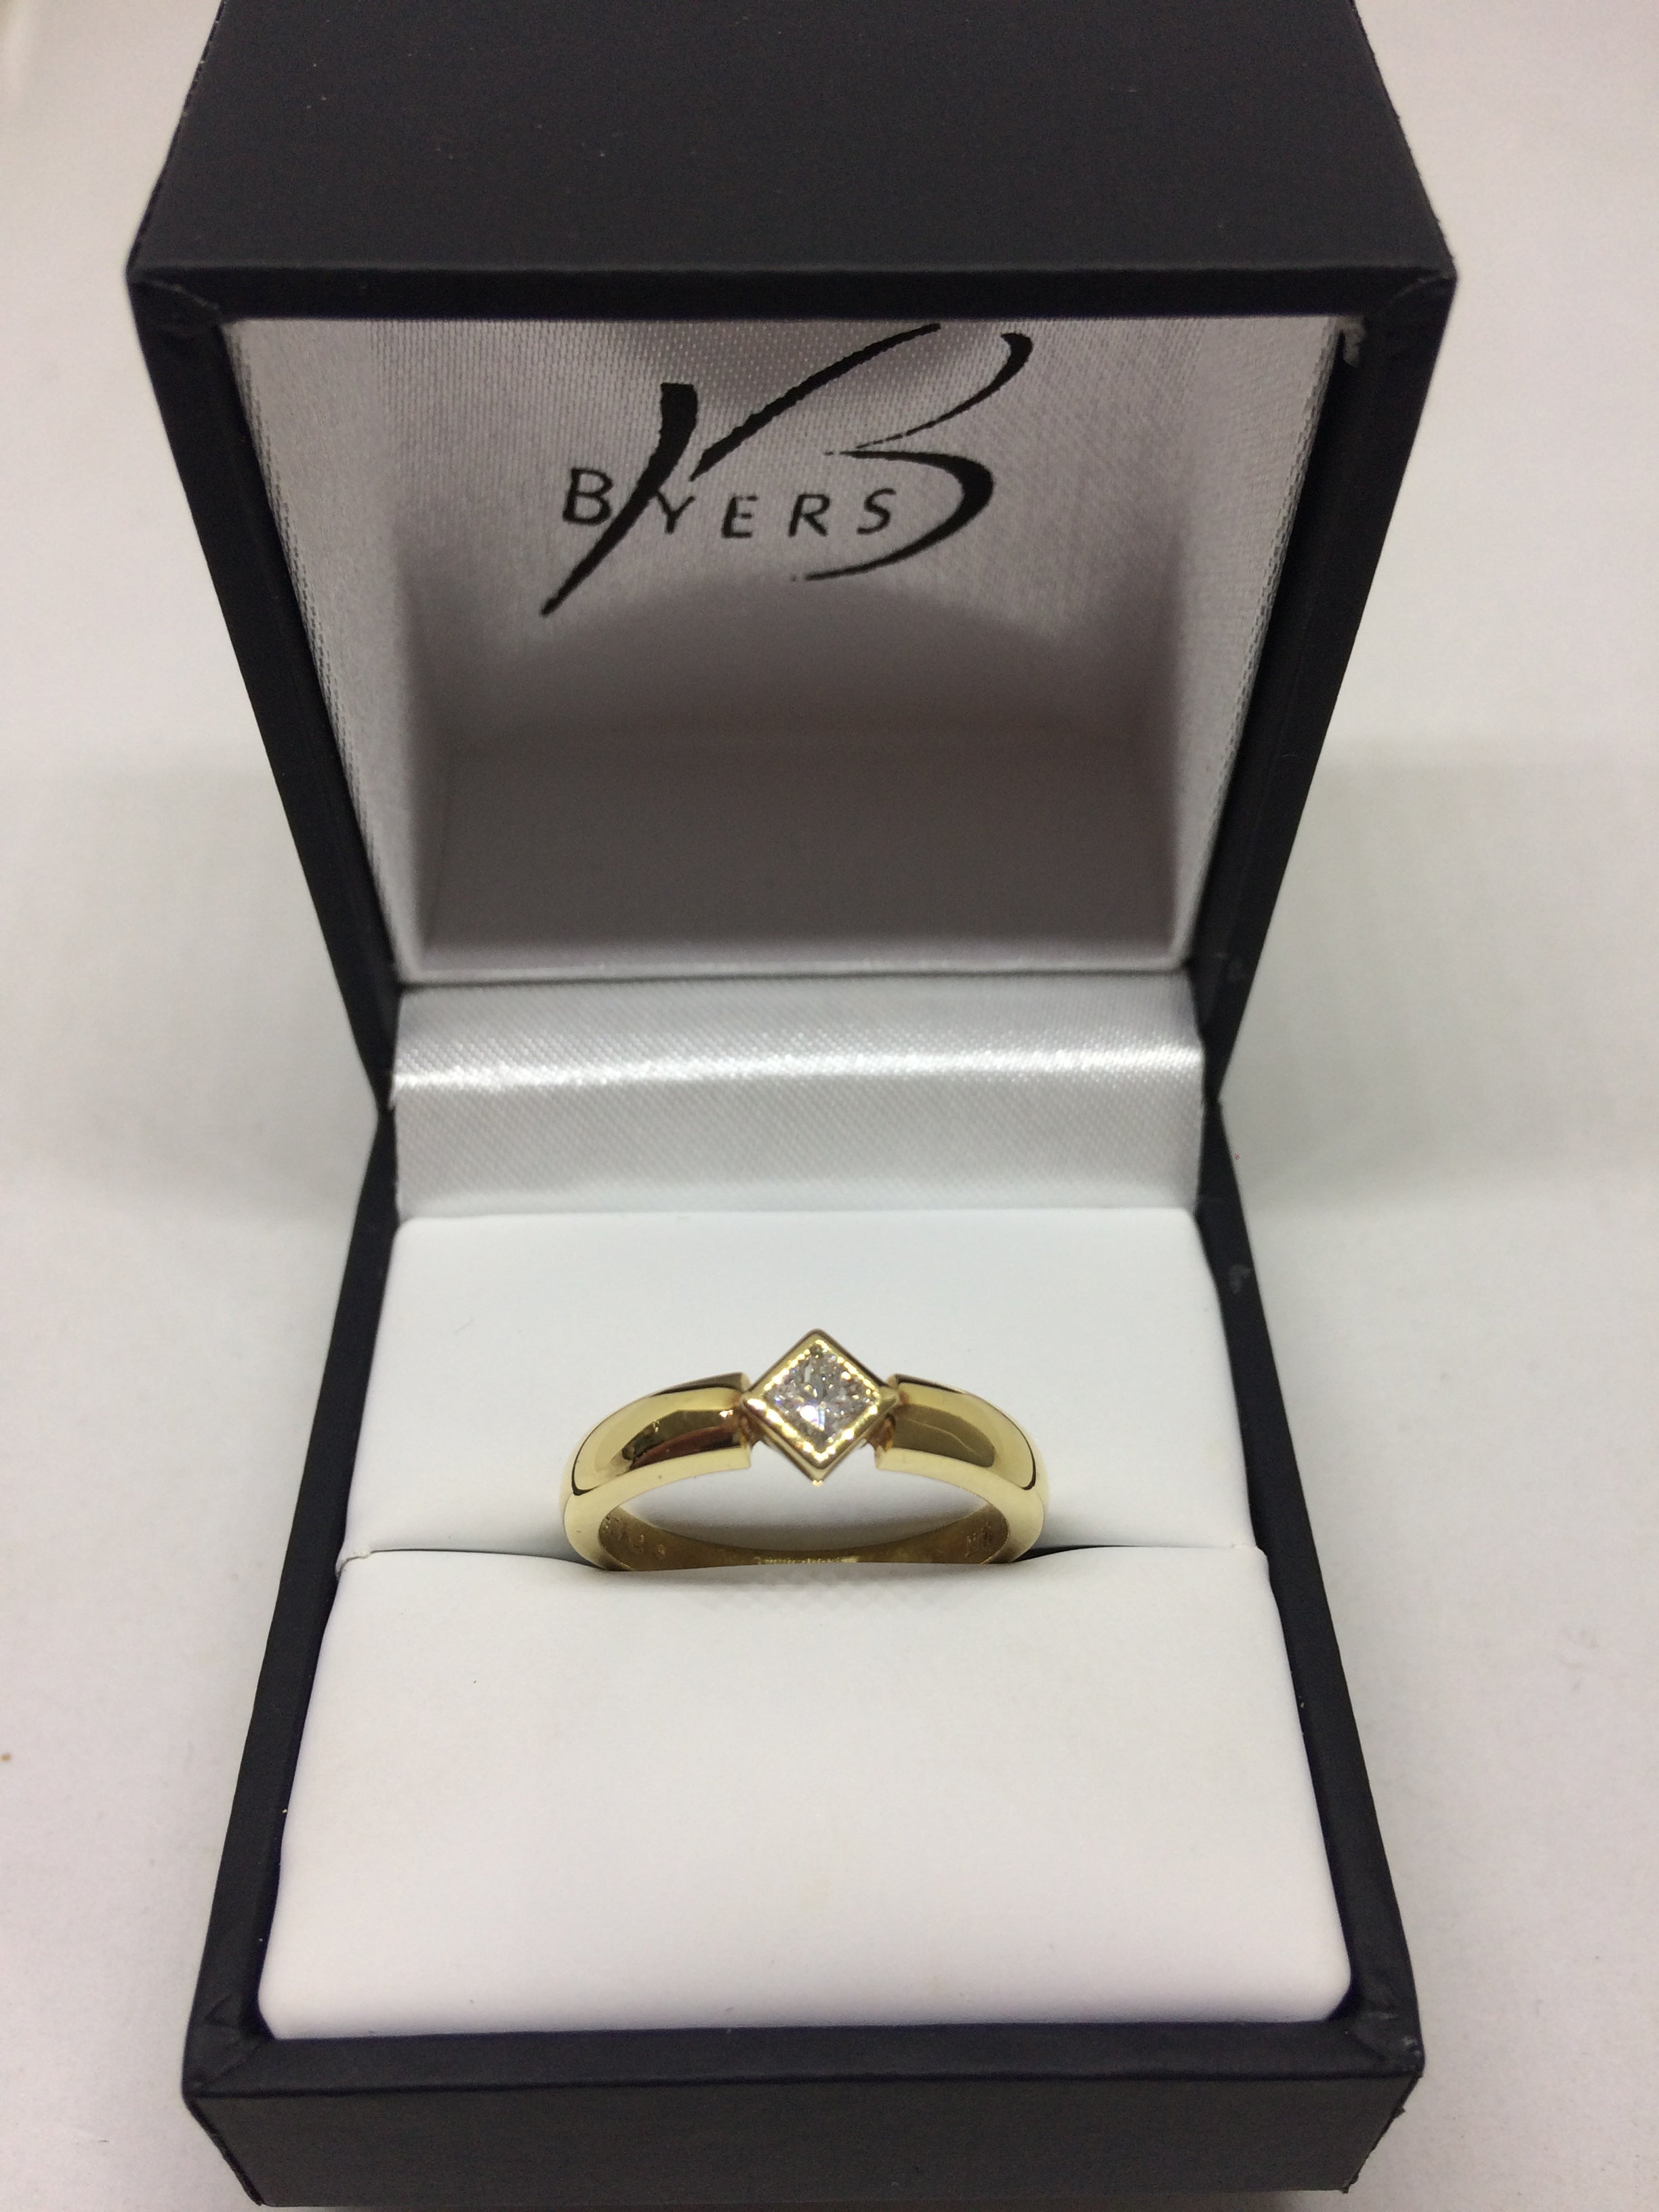 18ct Yellow Gold Rub Over Style Princess Cut Diamond Engagement Ring #6246